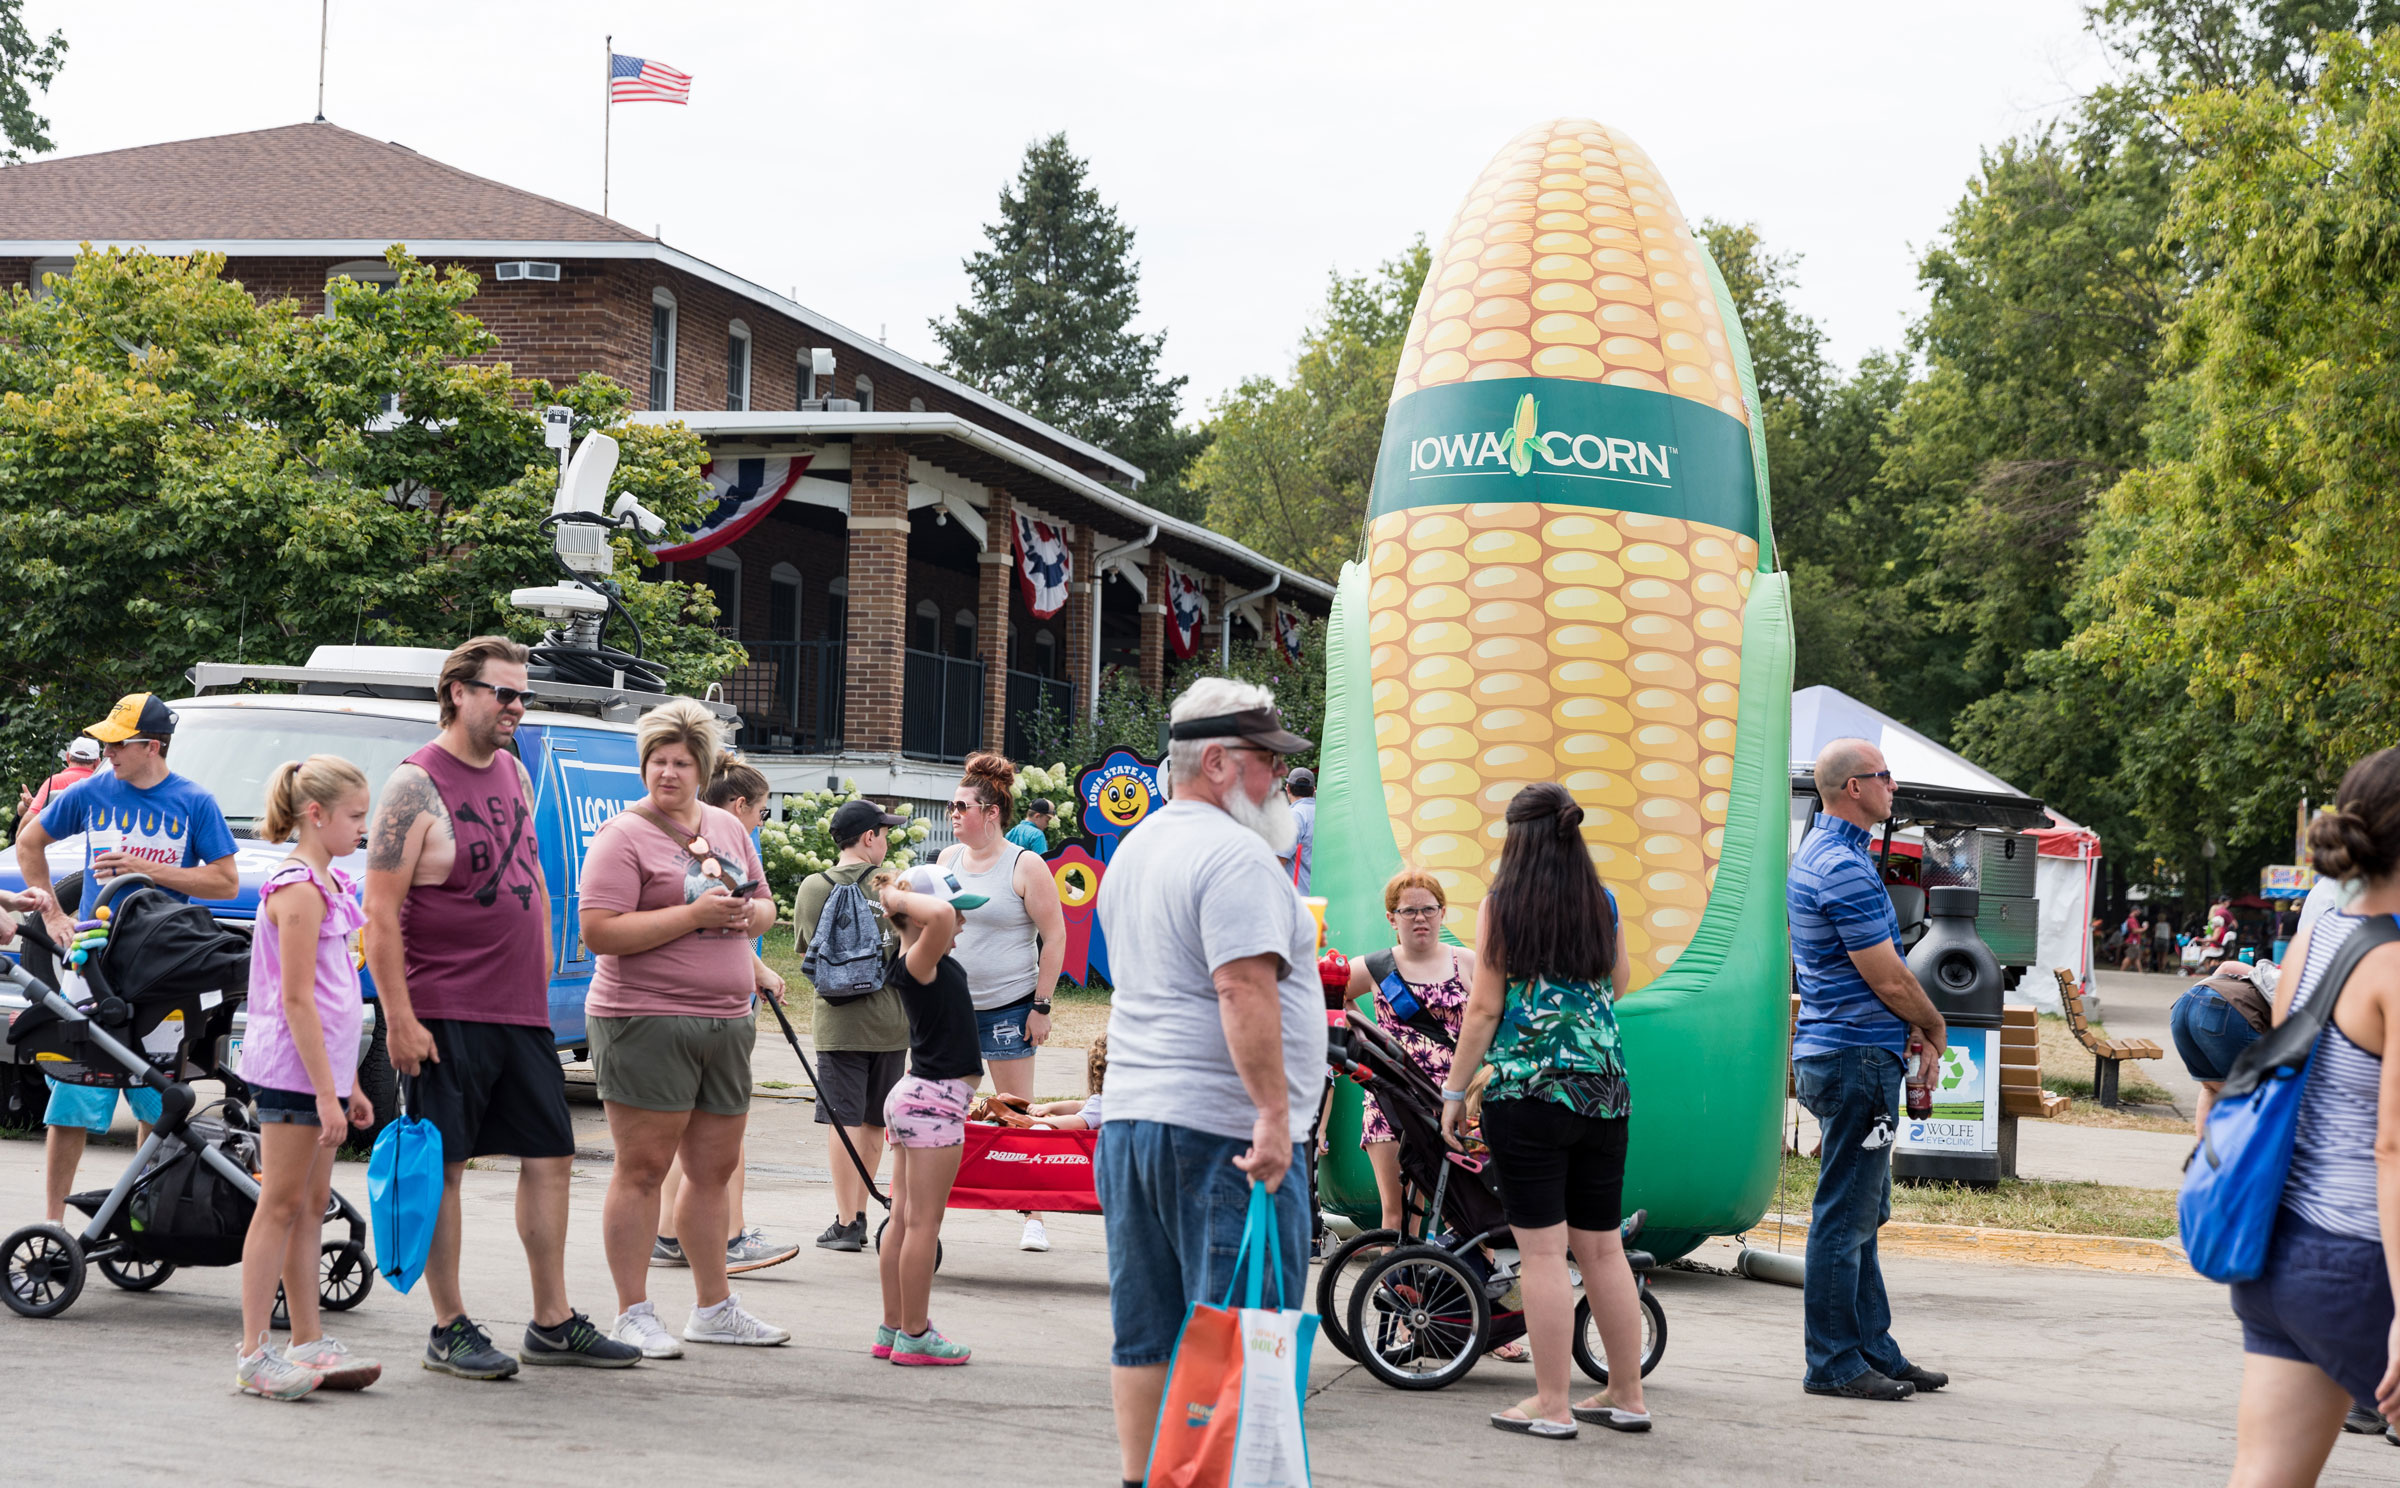 Iowa Corn Day at Iowa State Fair